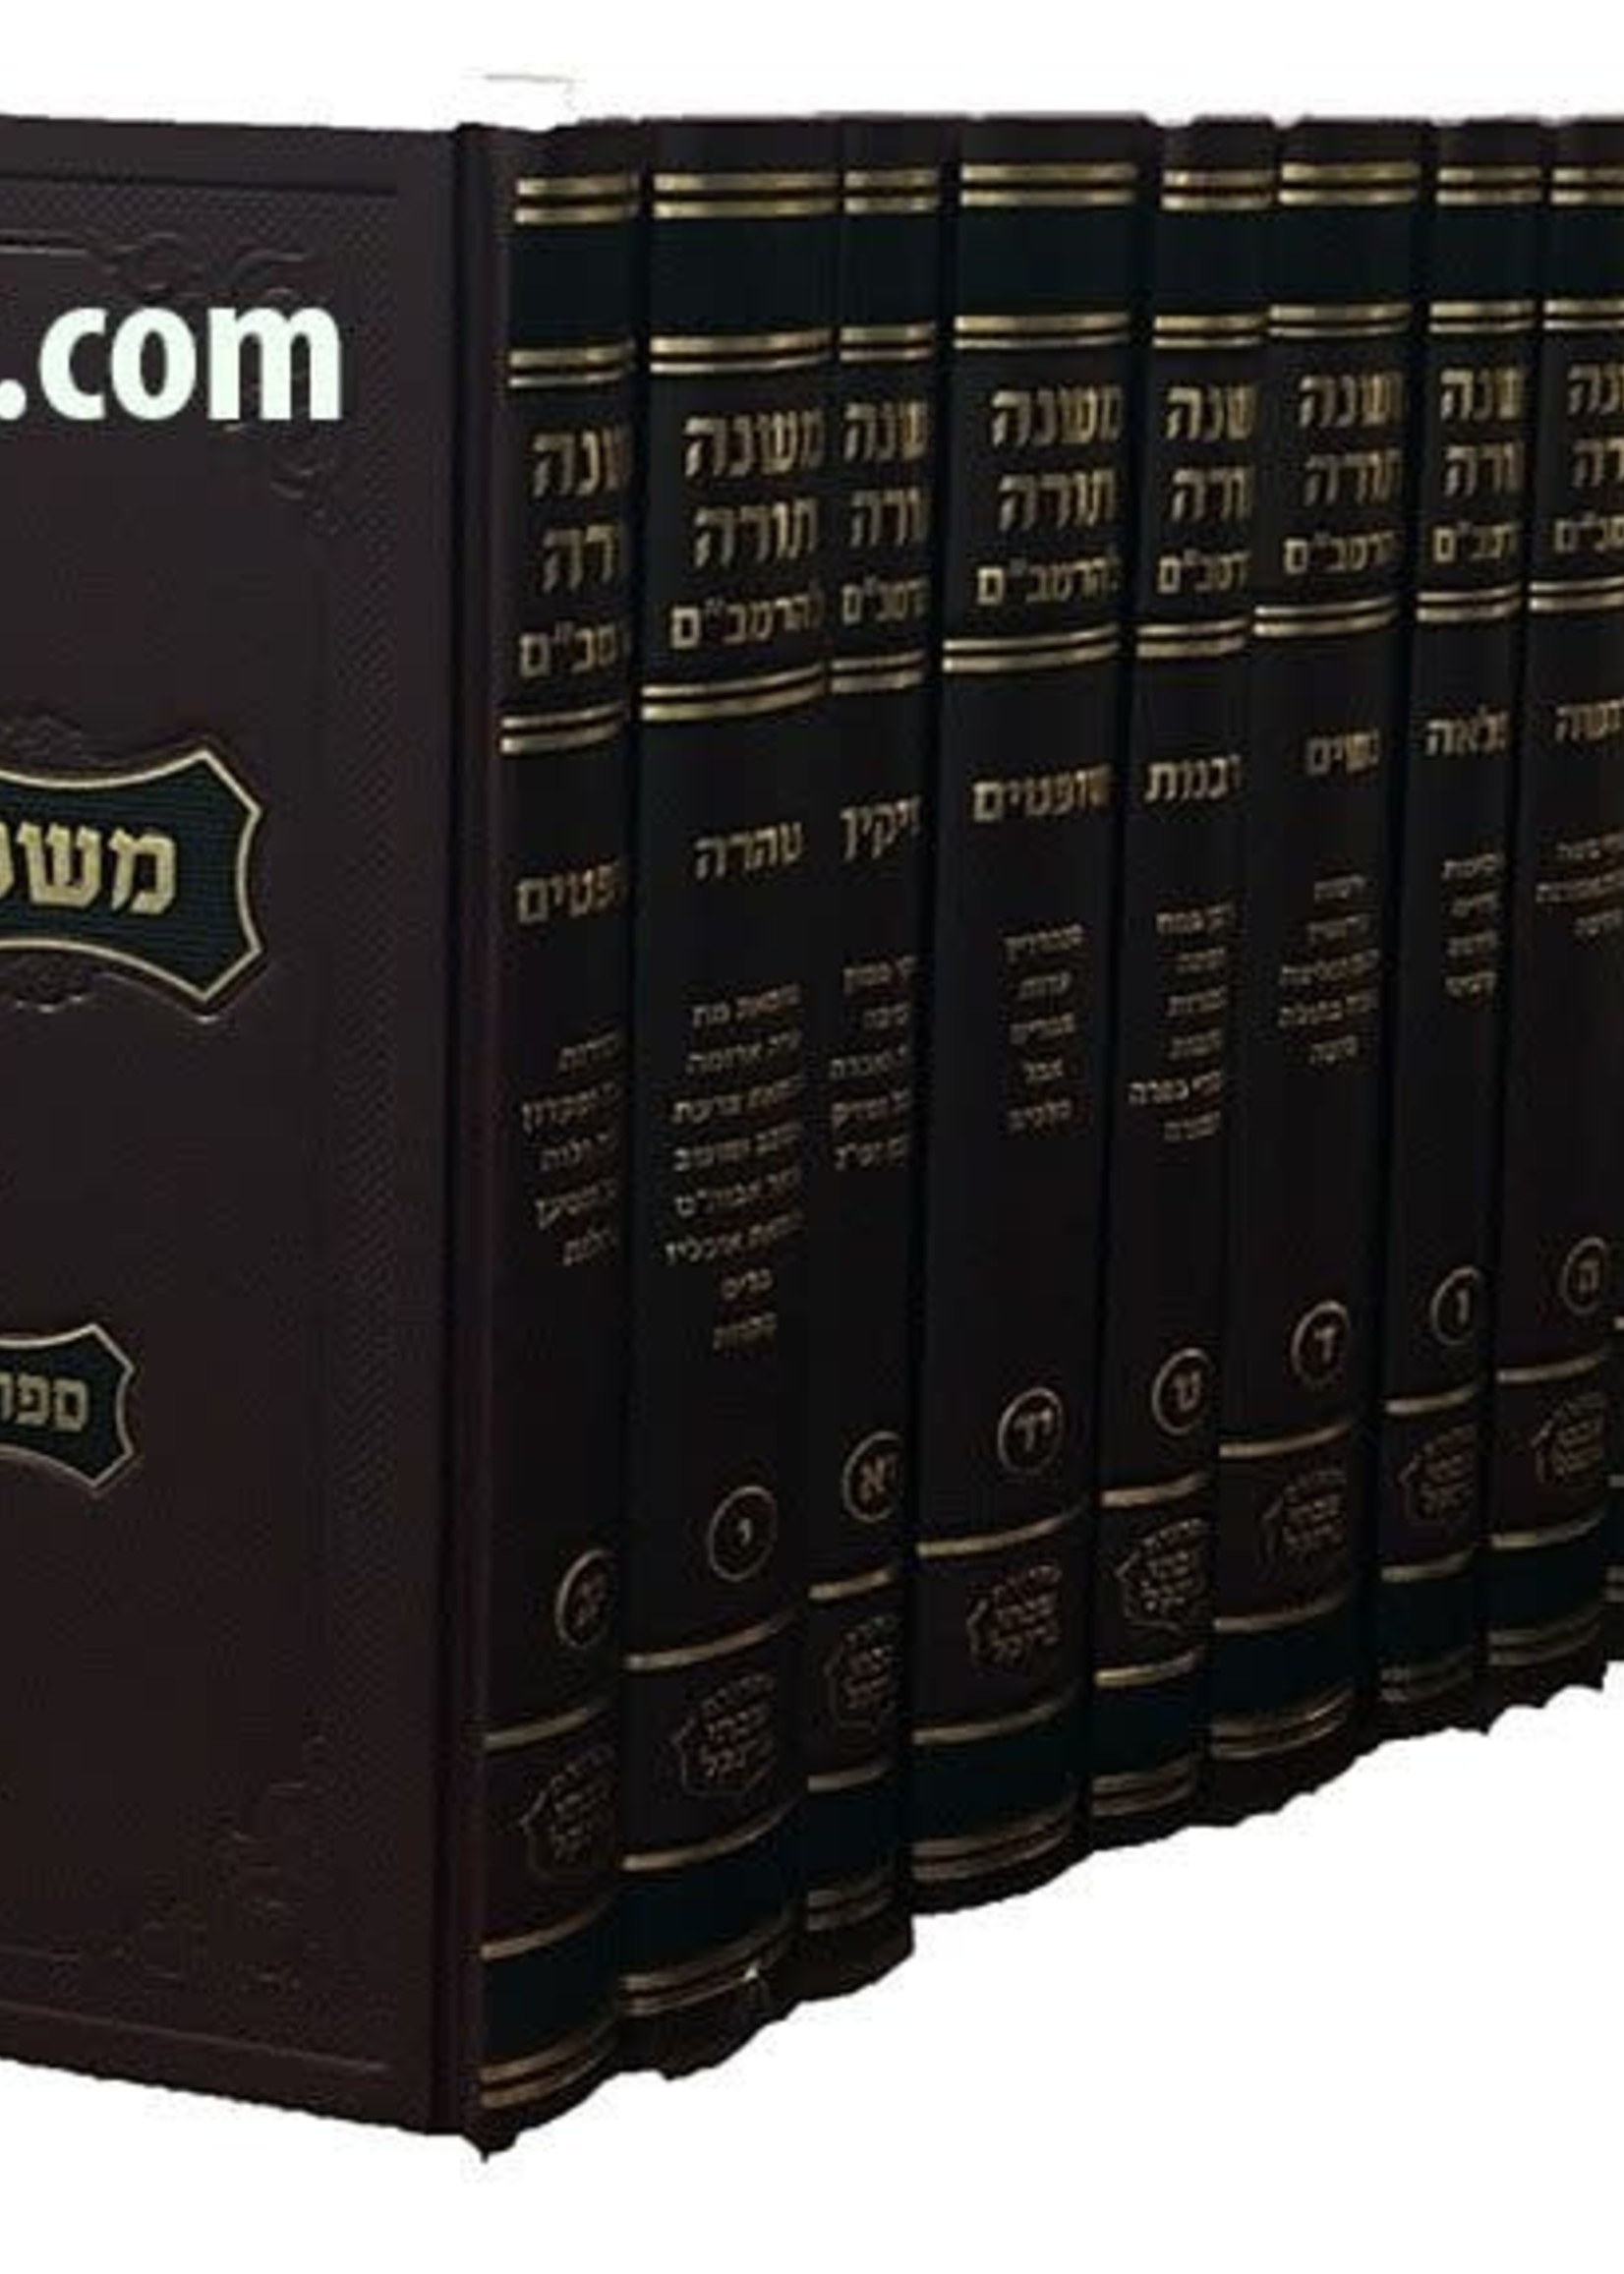 Mishneh Torah Rambam Frankel New Edition 16 Volume SetLarge Size / משנה תורה רמב"ם פרנקל ט"ז כרכים סעט חדש גדול